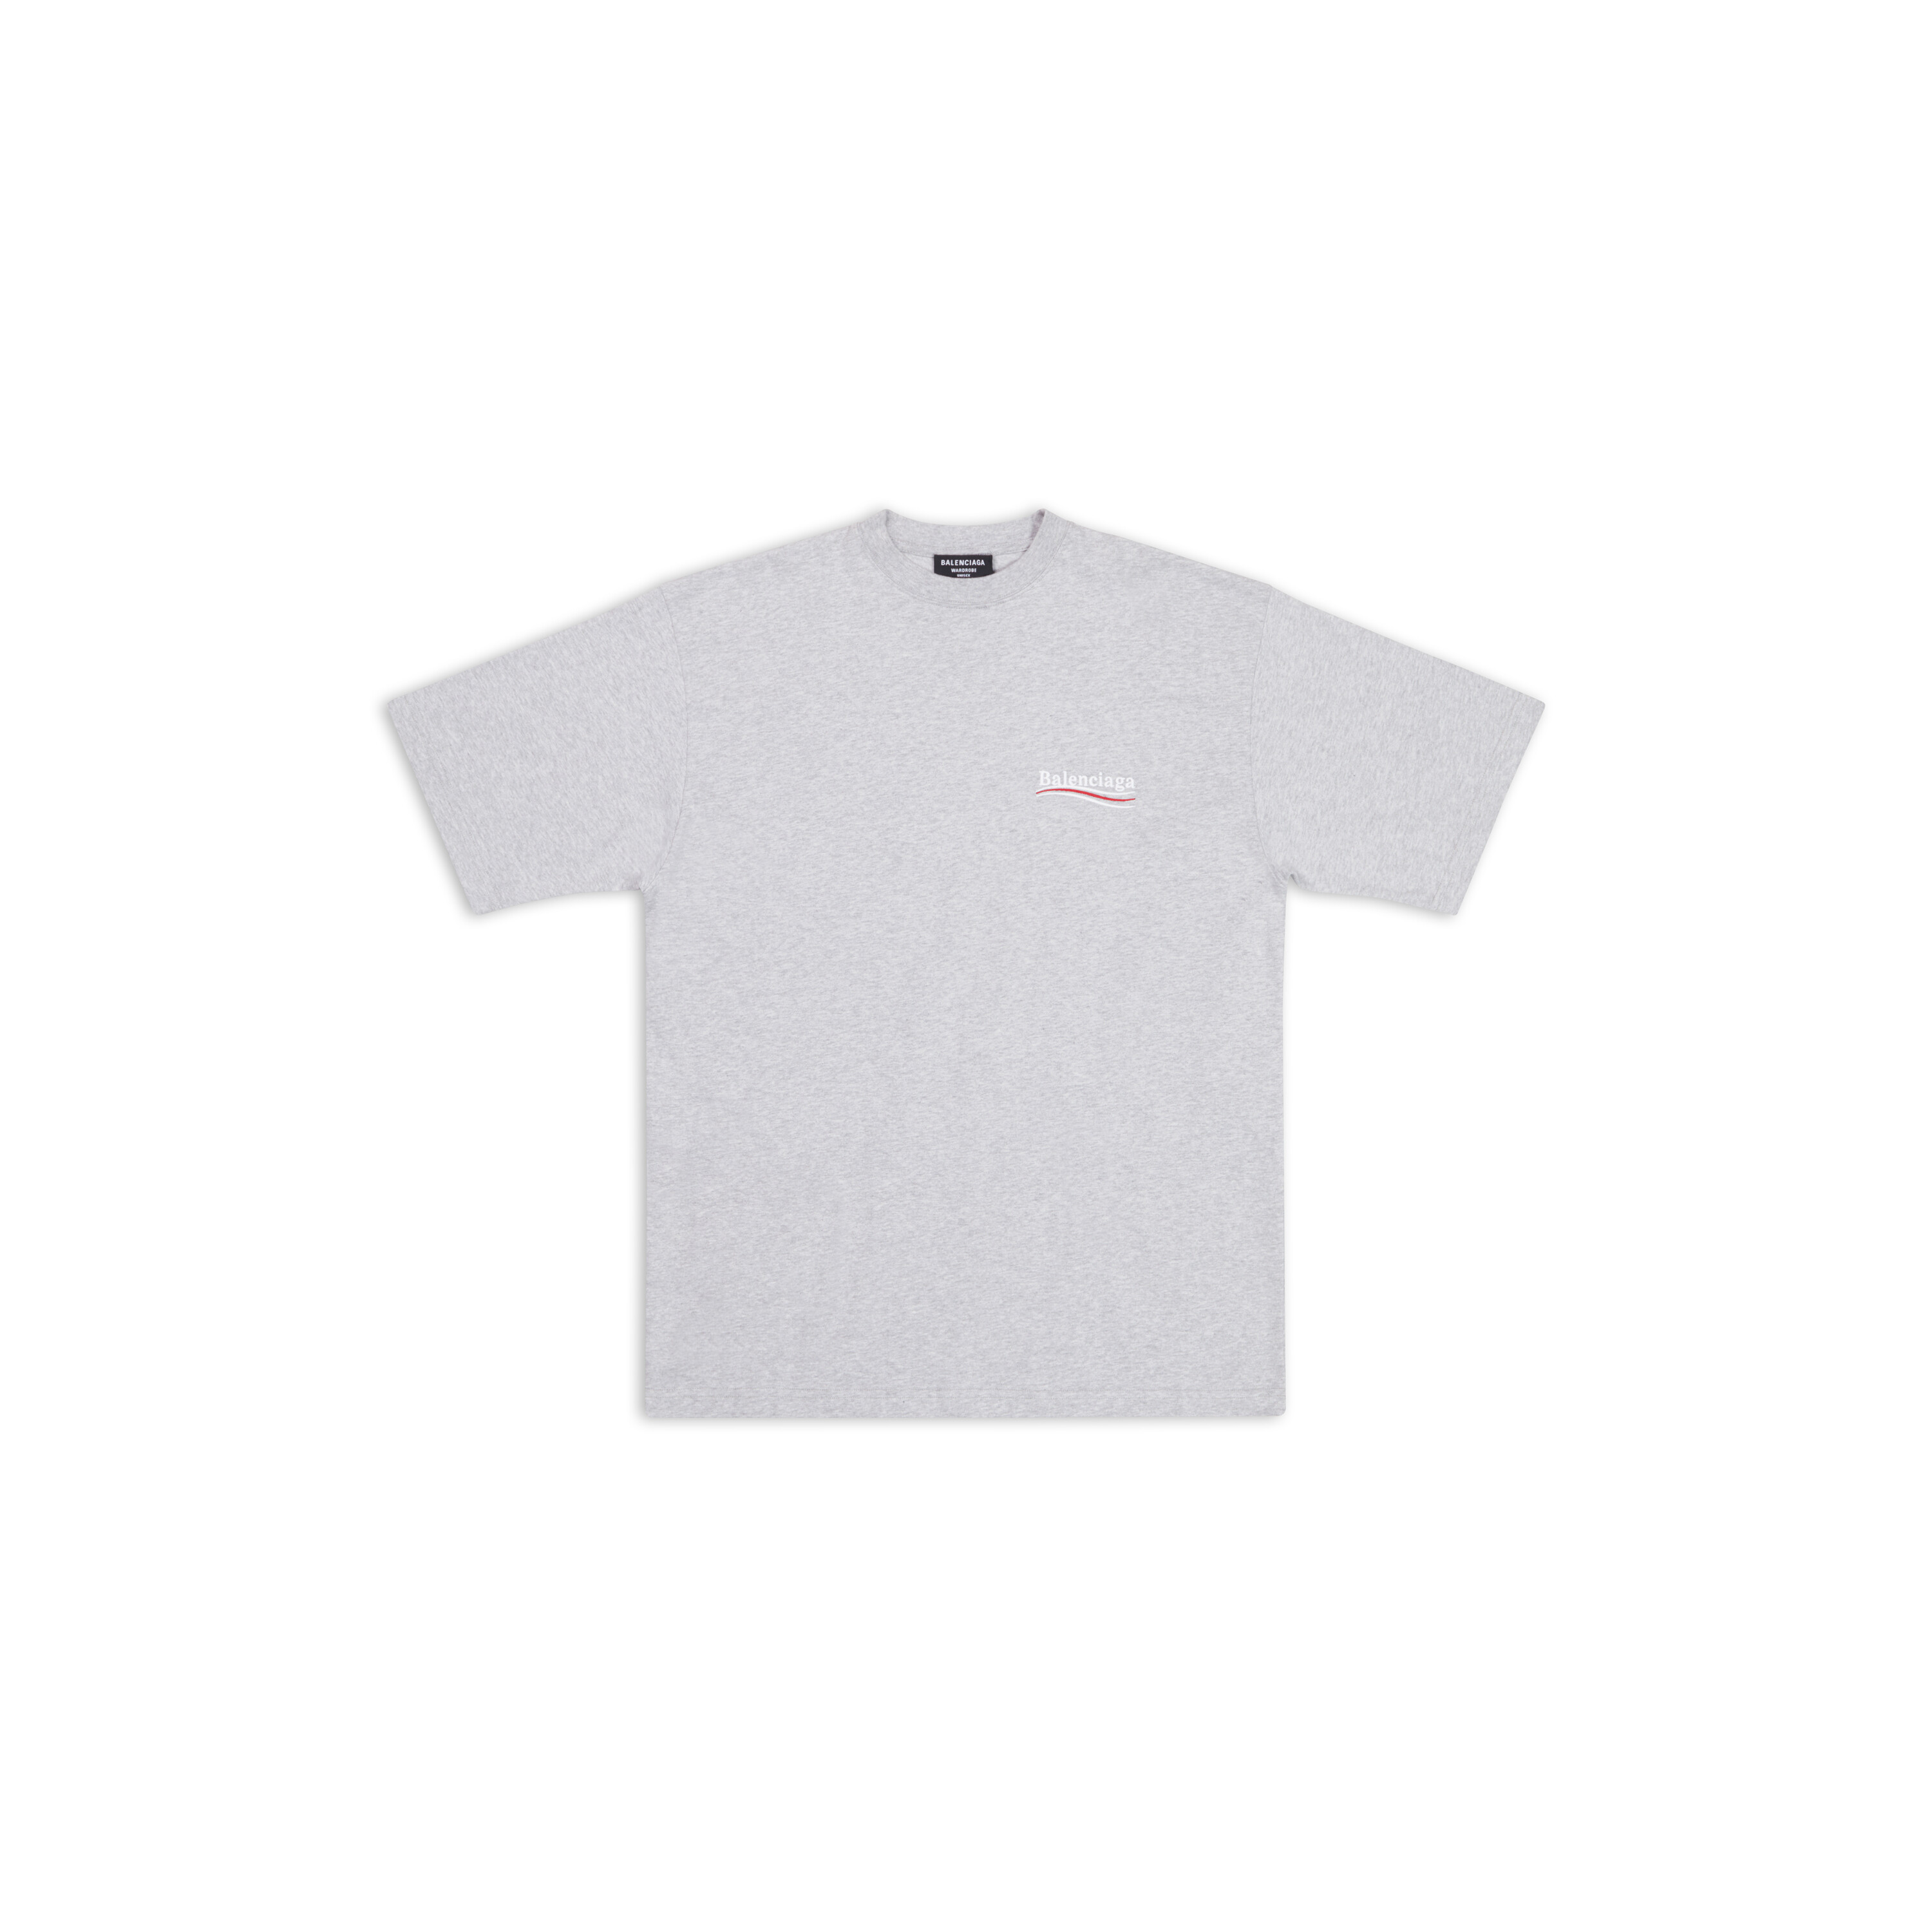 BB Medium Fit T Shirt in Grey - Balenciaga